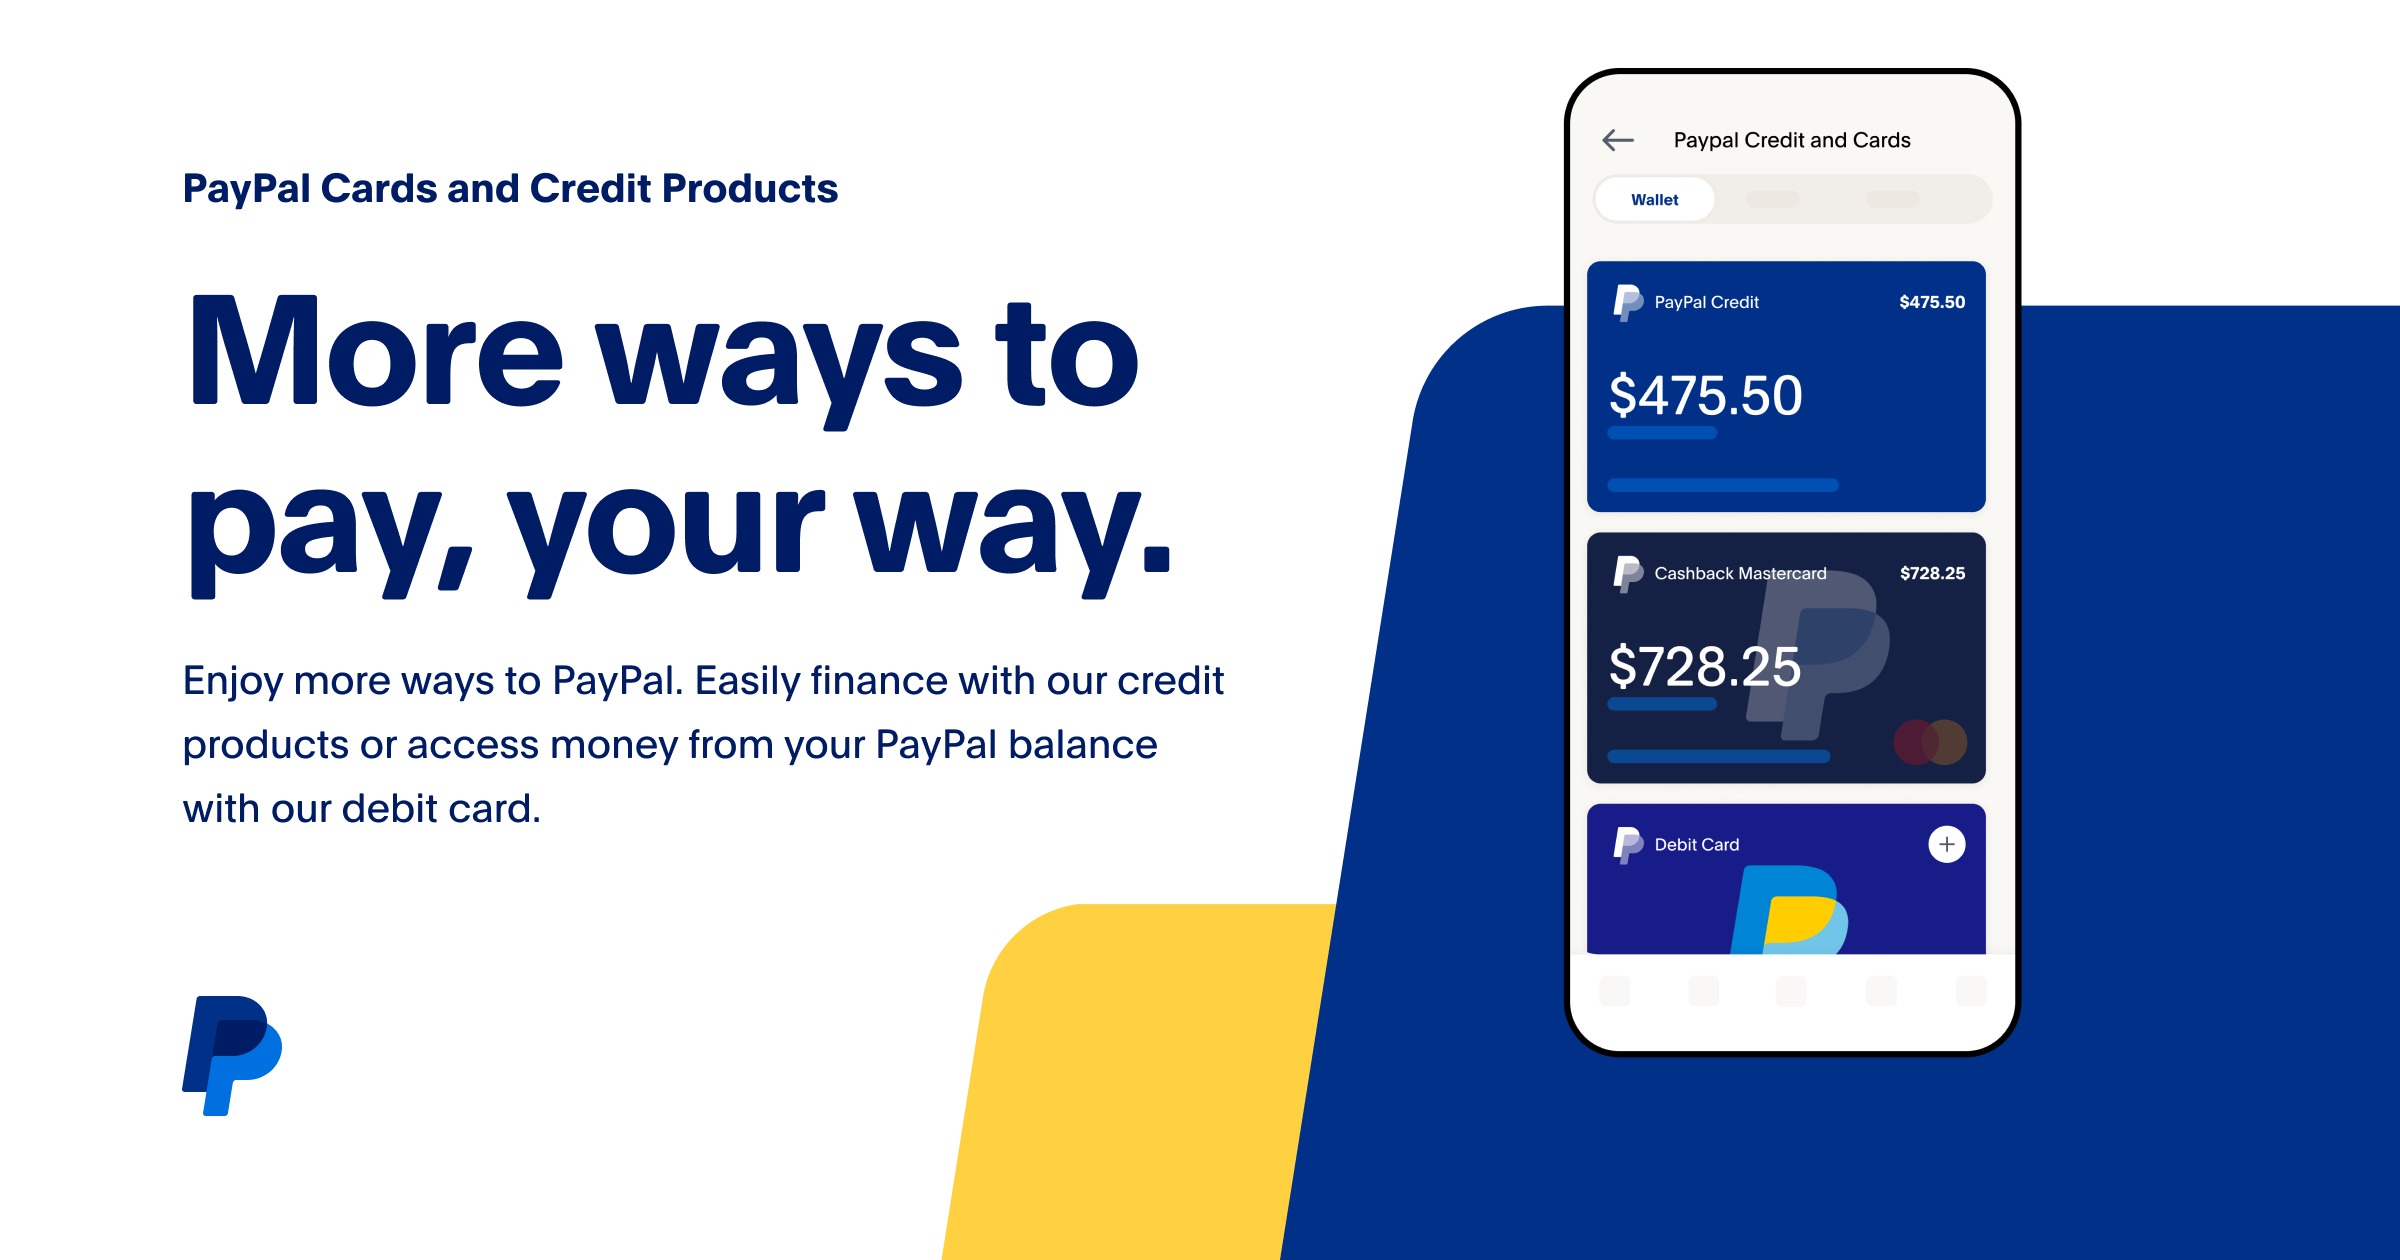 PayPal Mastercard Reloadable Prepaid Debit Card VL $20-$500, 2.95